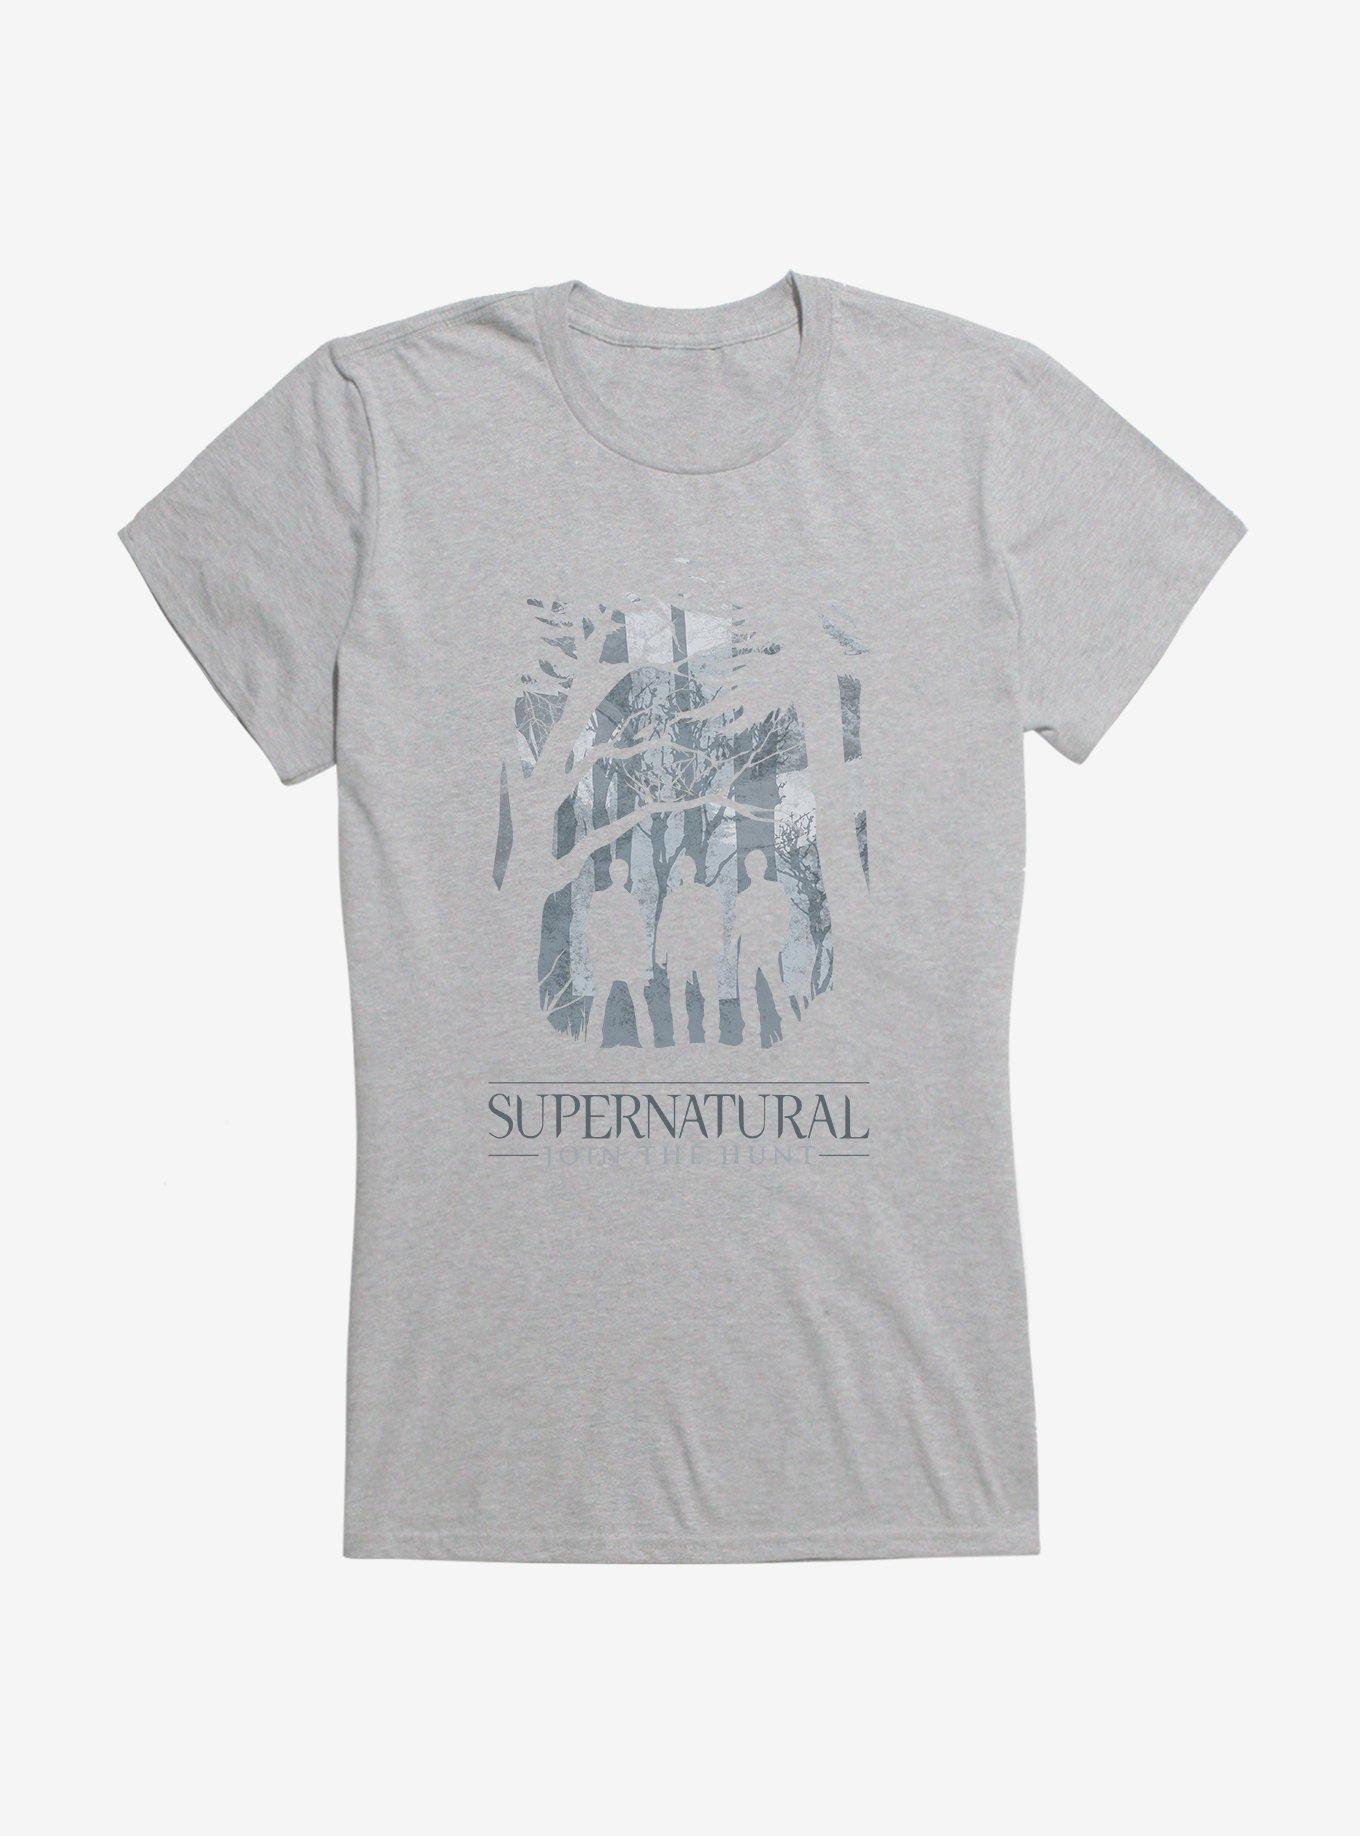 Supernatural Forest Join The Hunt Girls T-Shirt